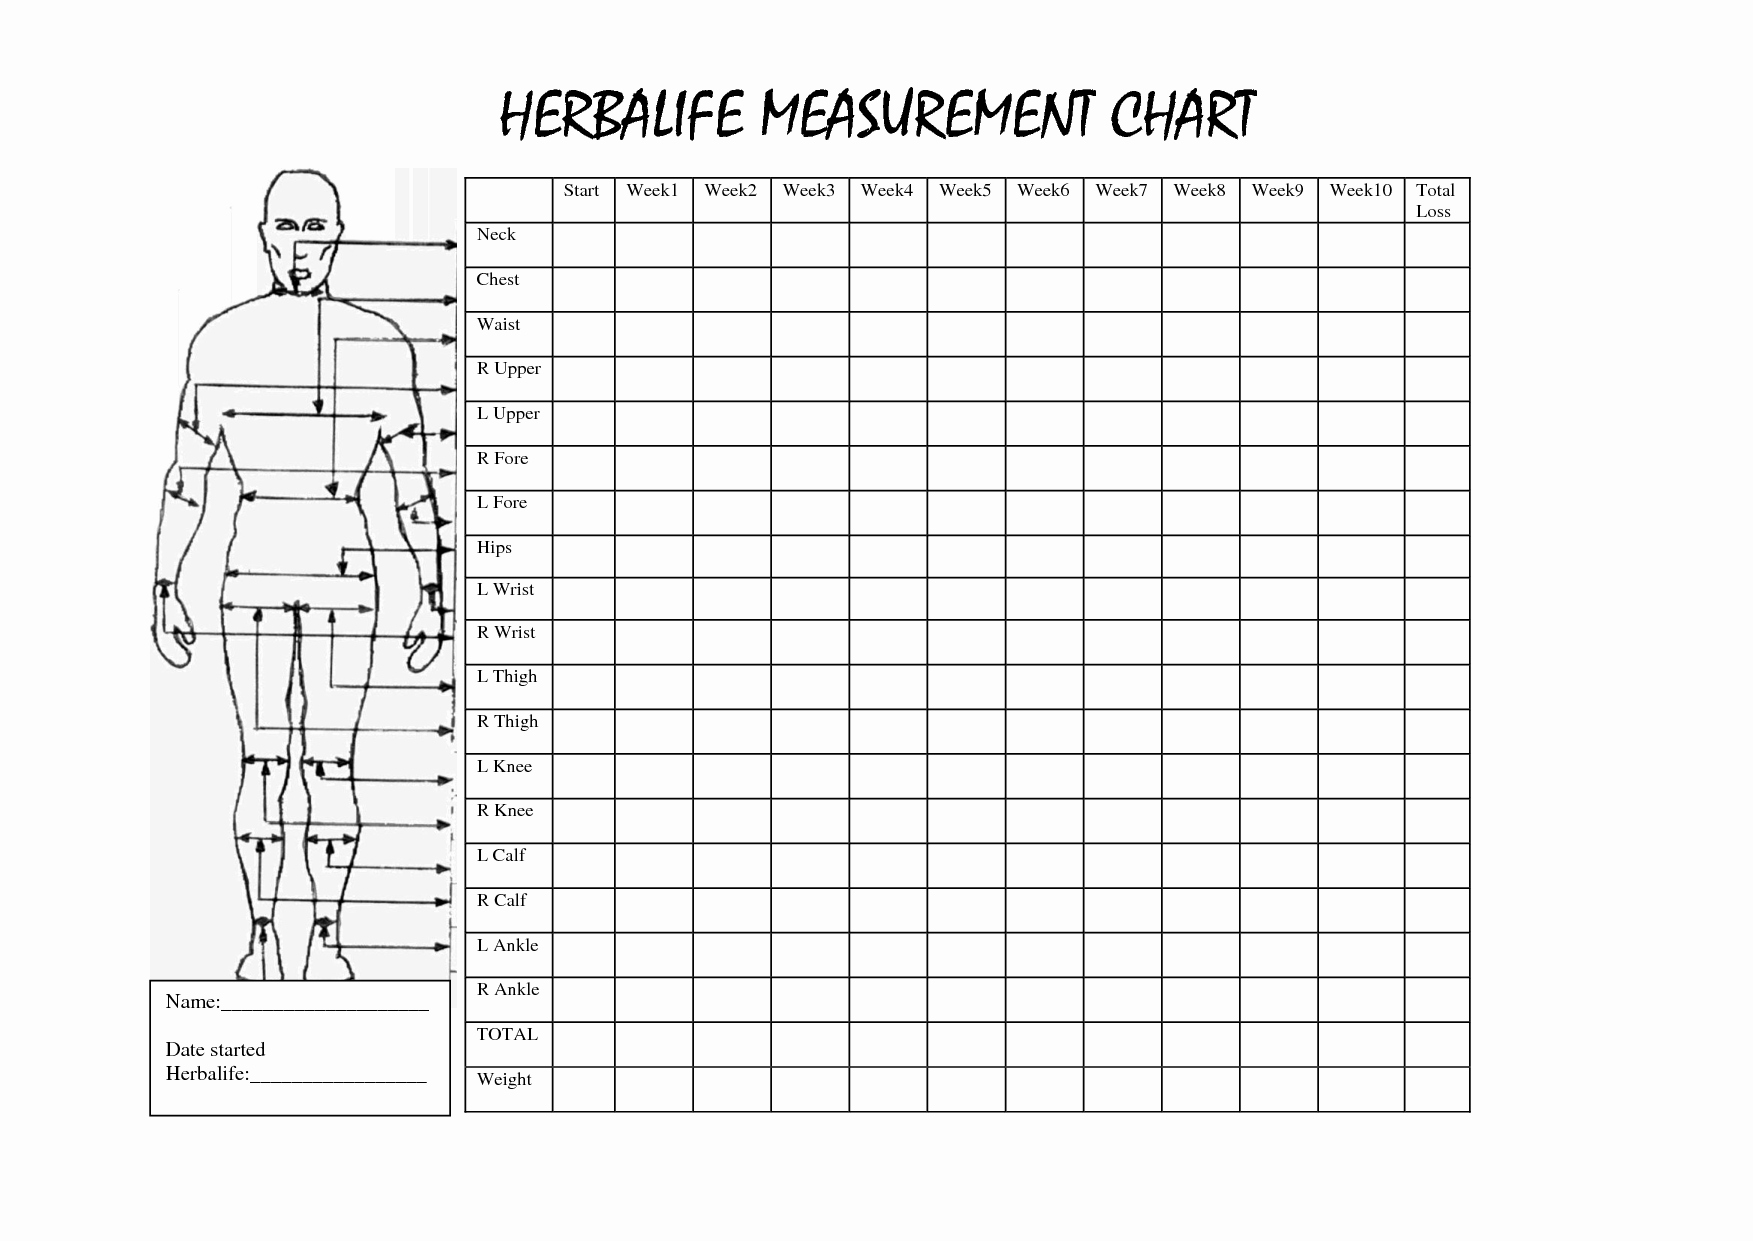 Weight Loss Measurement Chart Fresh Herbalife Measurement Chart